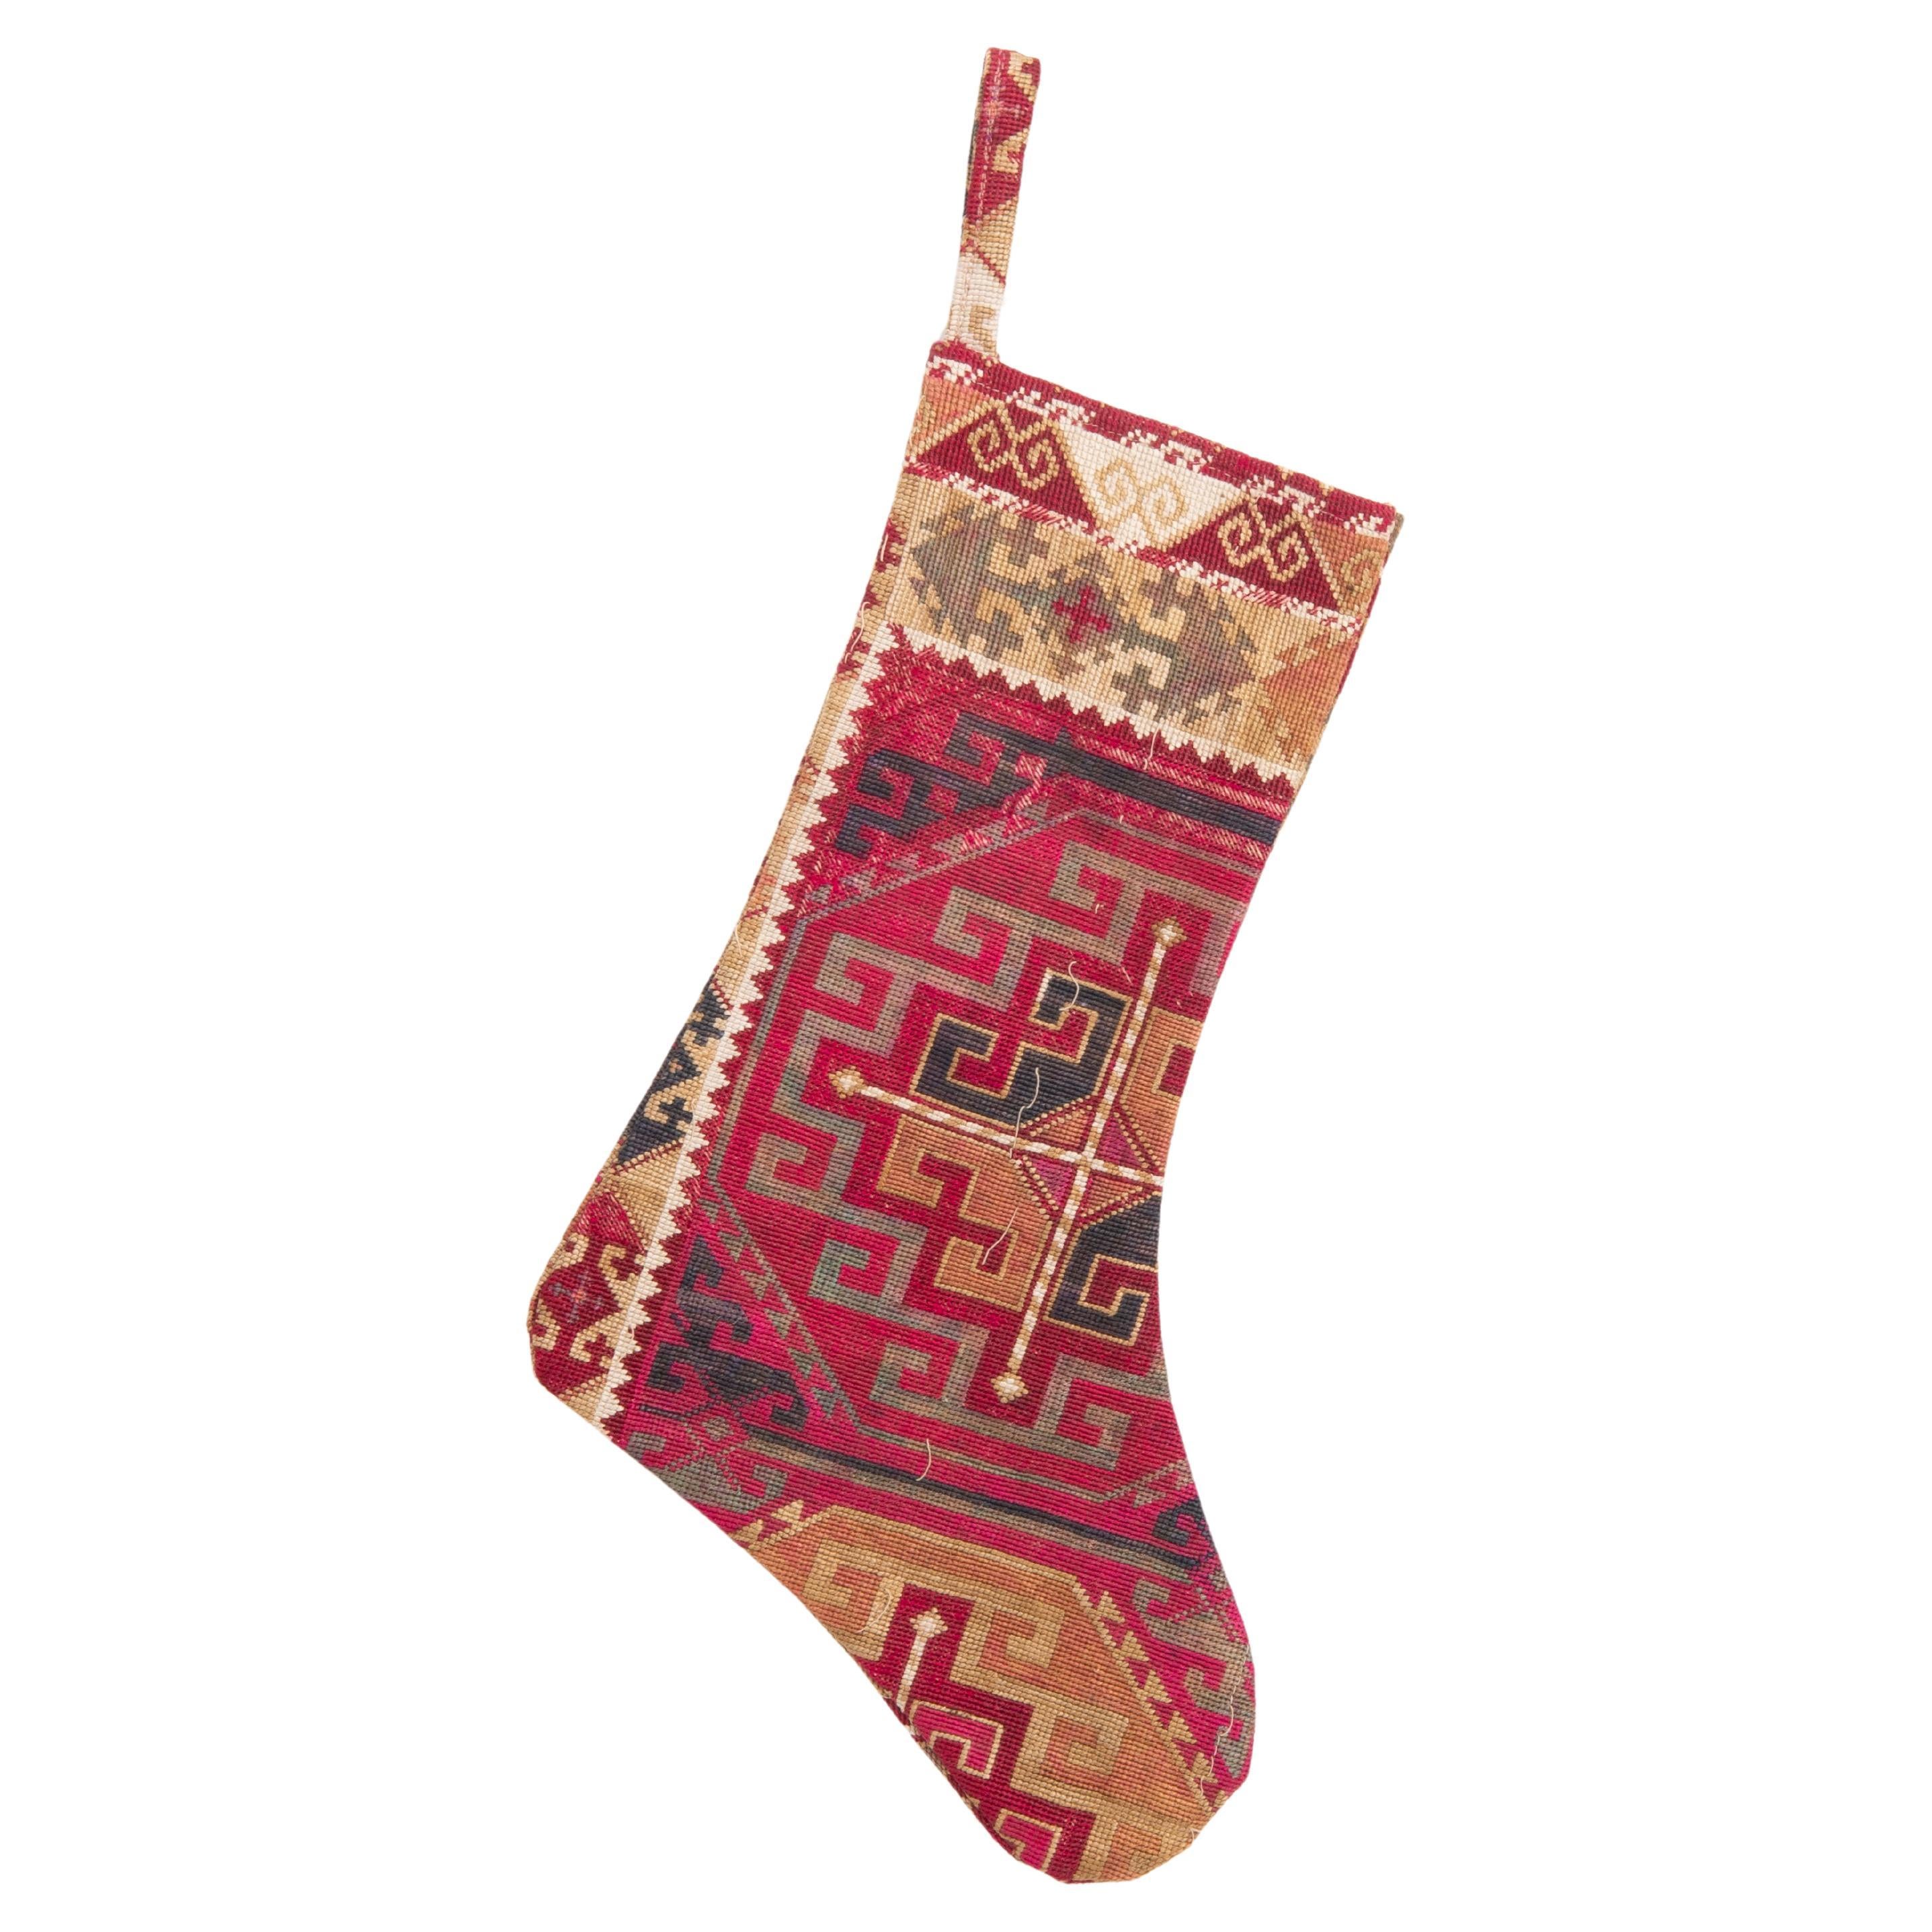 Double Sided Christmas Stockings Made from Vintage Uzbek Lakai Embroidery